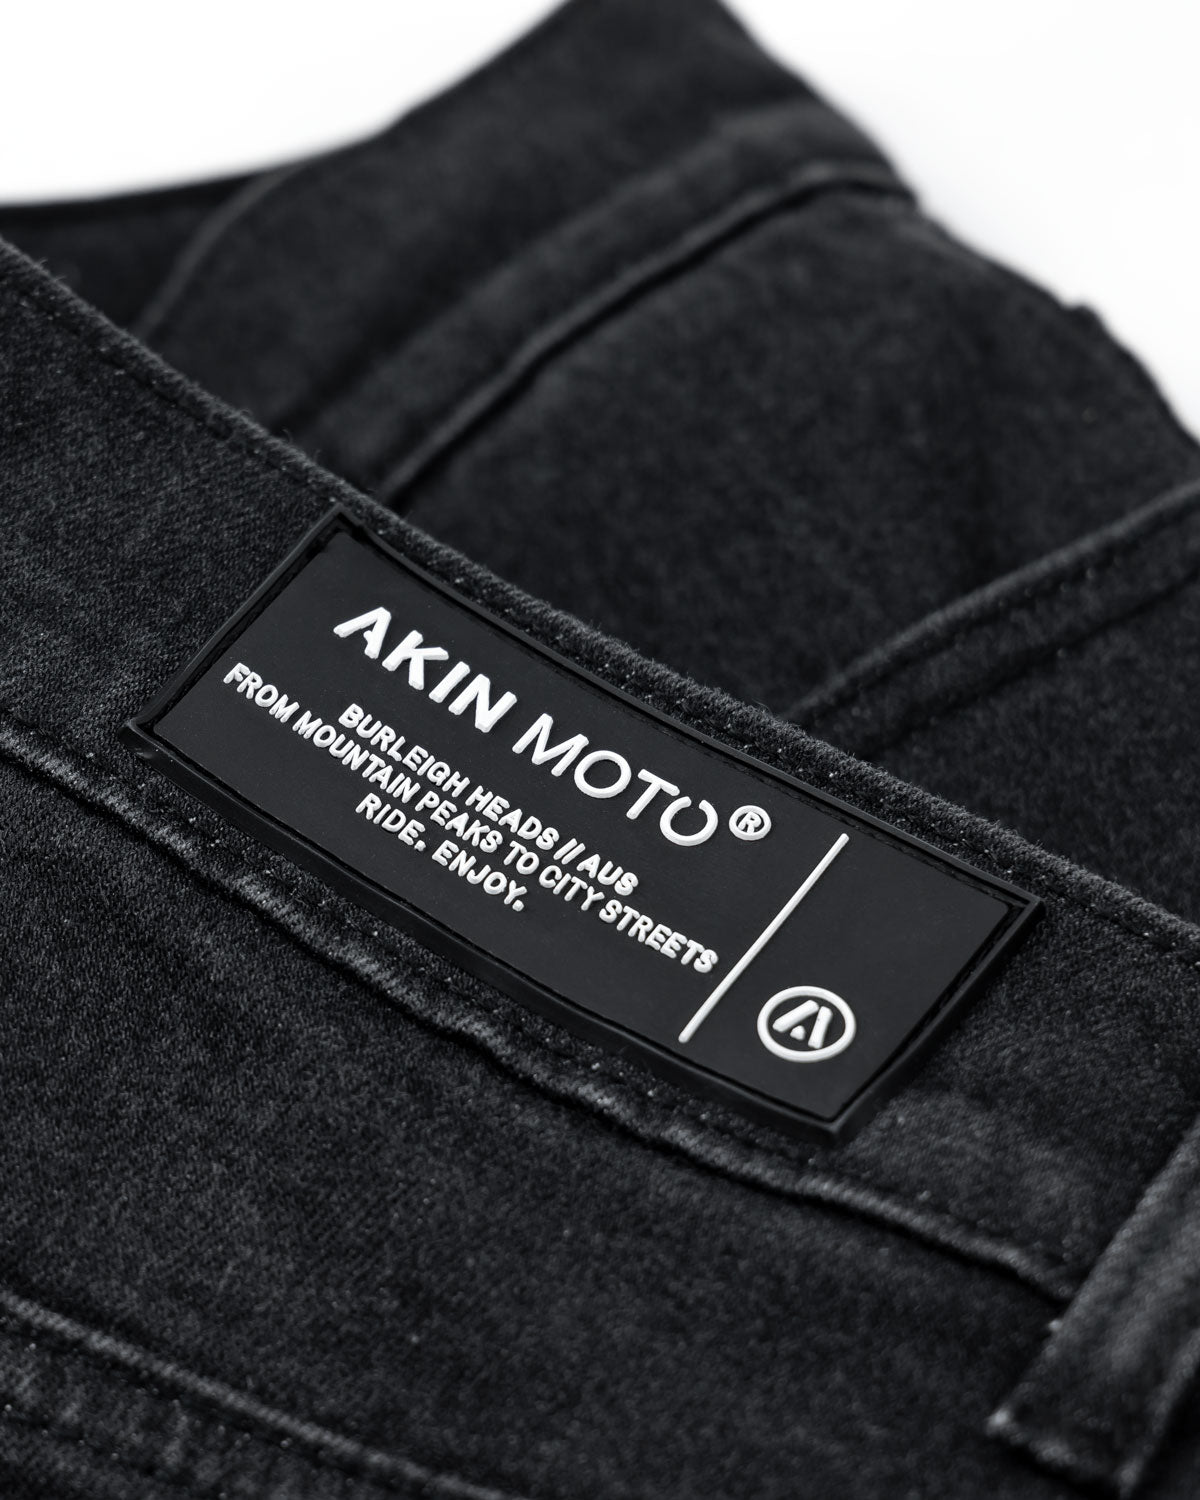 Akin Moto Interceptor Protective Motorcycle Jeans